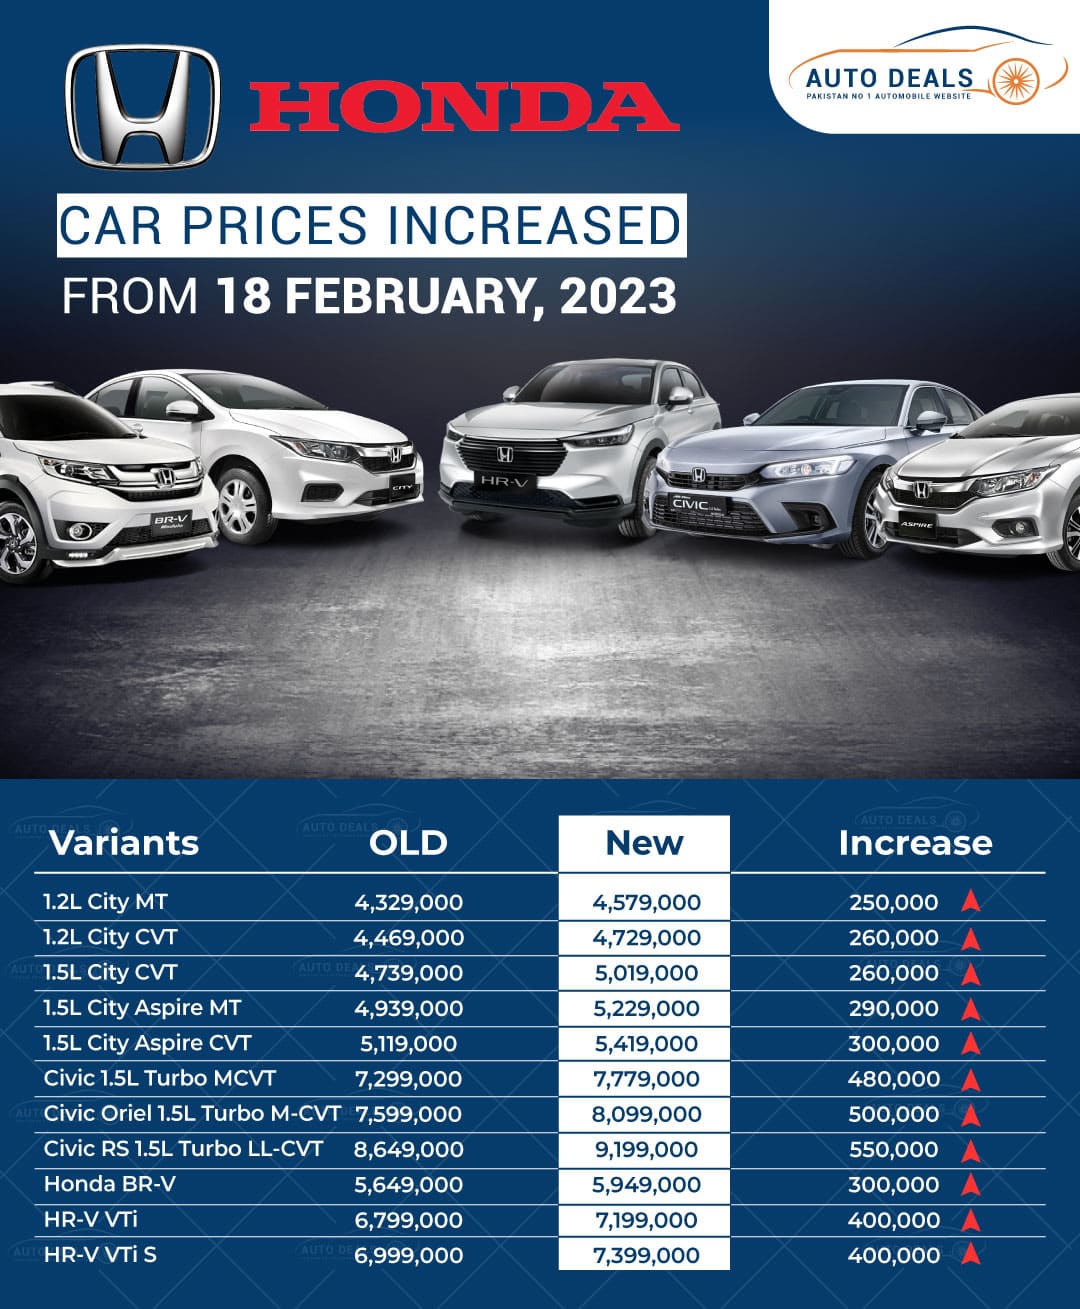 Honda Car prices